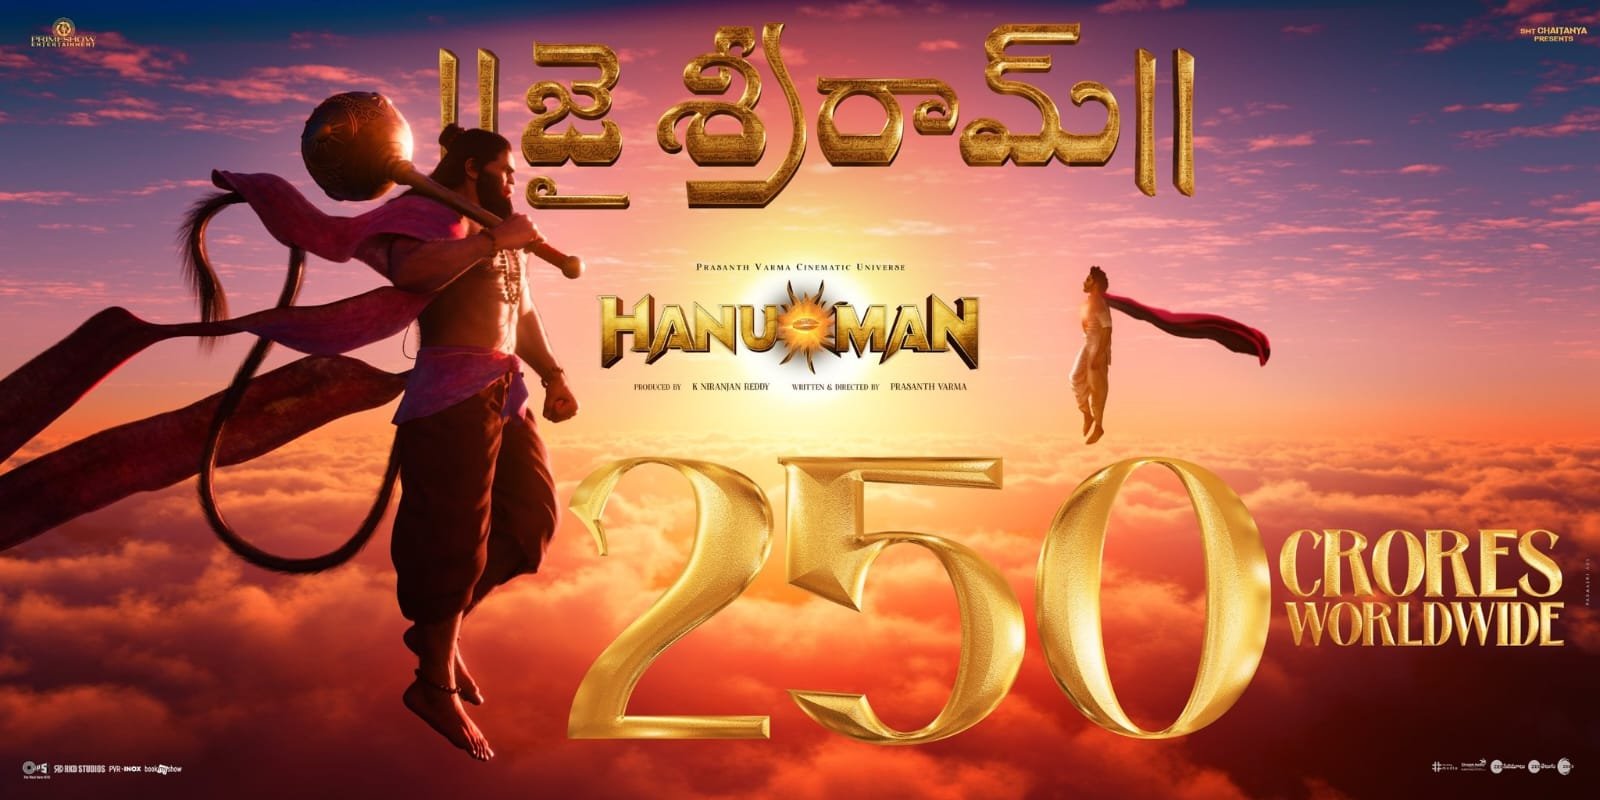 HanuMan Movie 28 Days Share in Both Telugu States